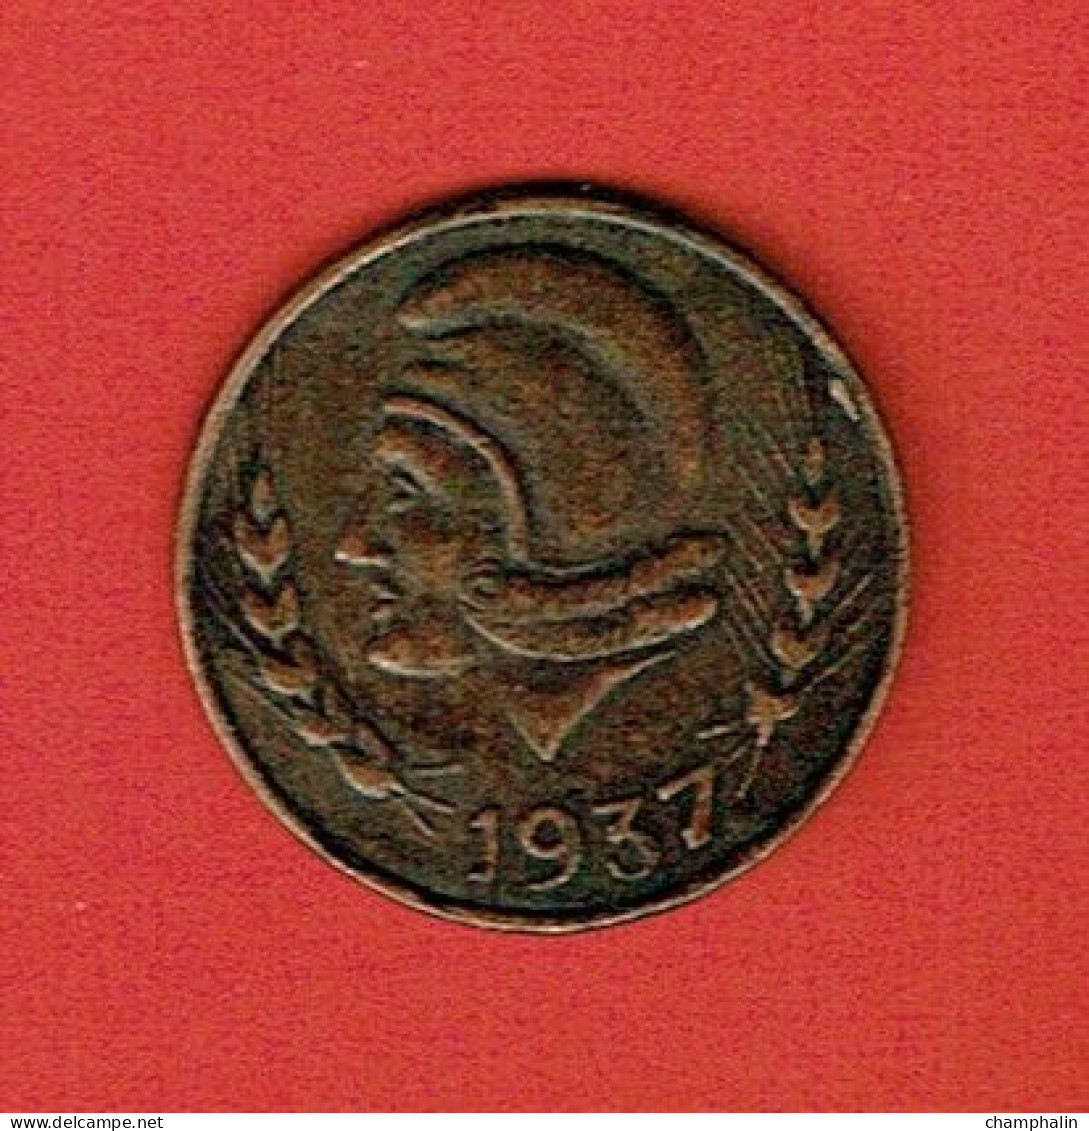 Espagne - Reproduction Monnaie - 25 Centimos 1937 - Consejo Municipal Ibi (Alicante) - Guerre Civile - Zona Republicana